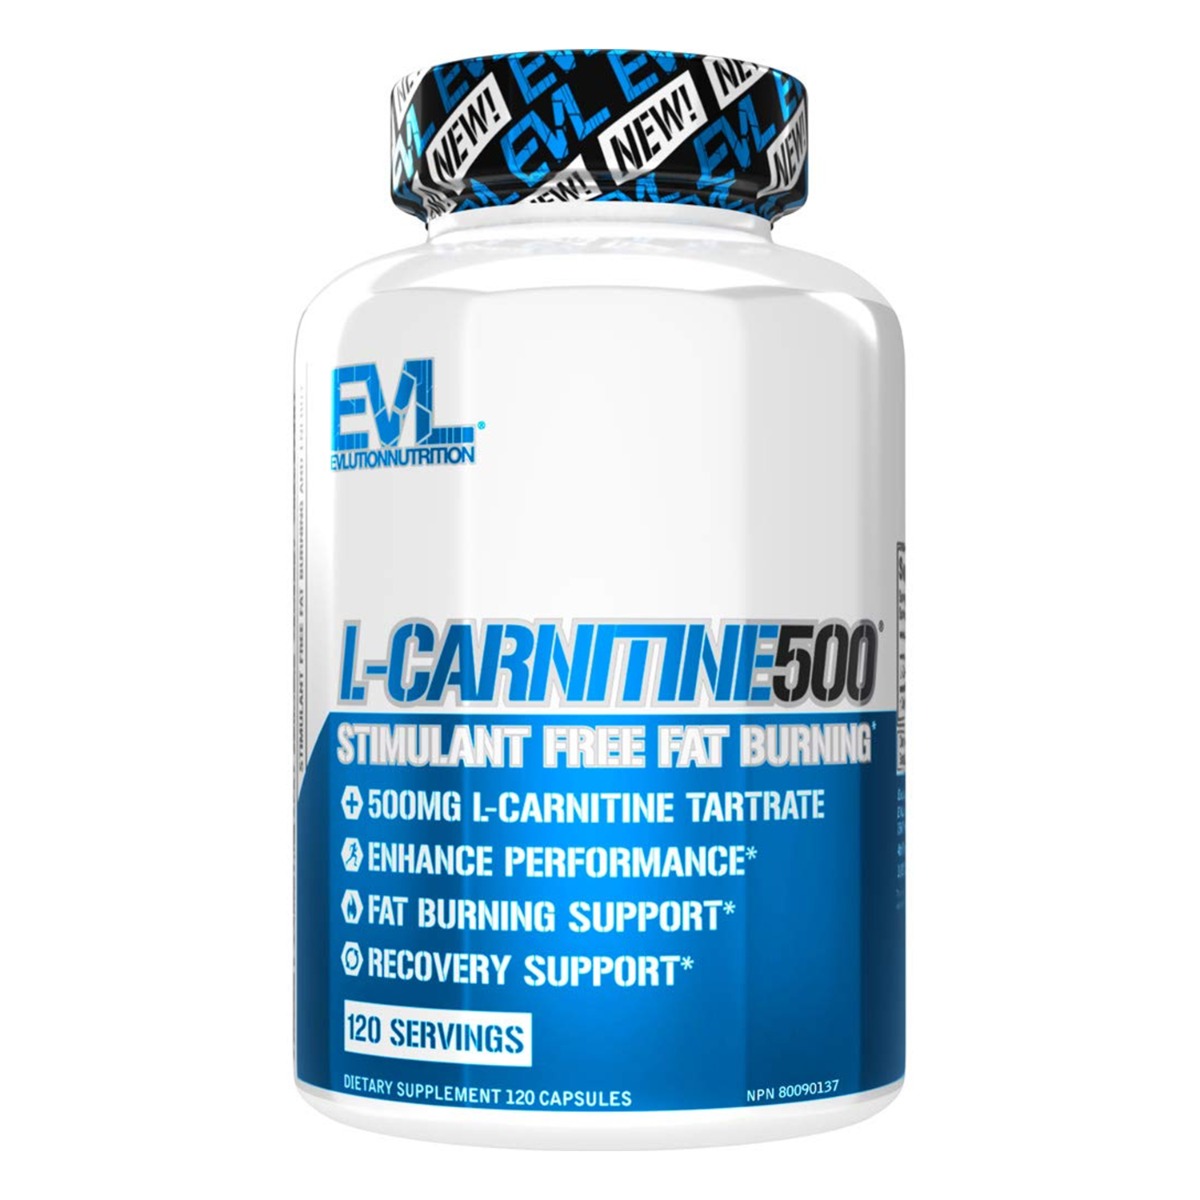 Evlution Nutrition L-Carnitine 500 - Stimulant Free Fat Burning, 120 Capsules